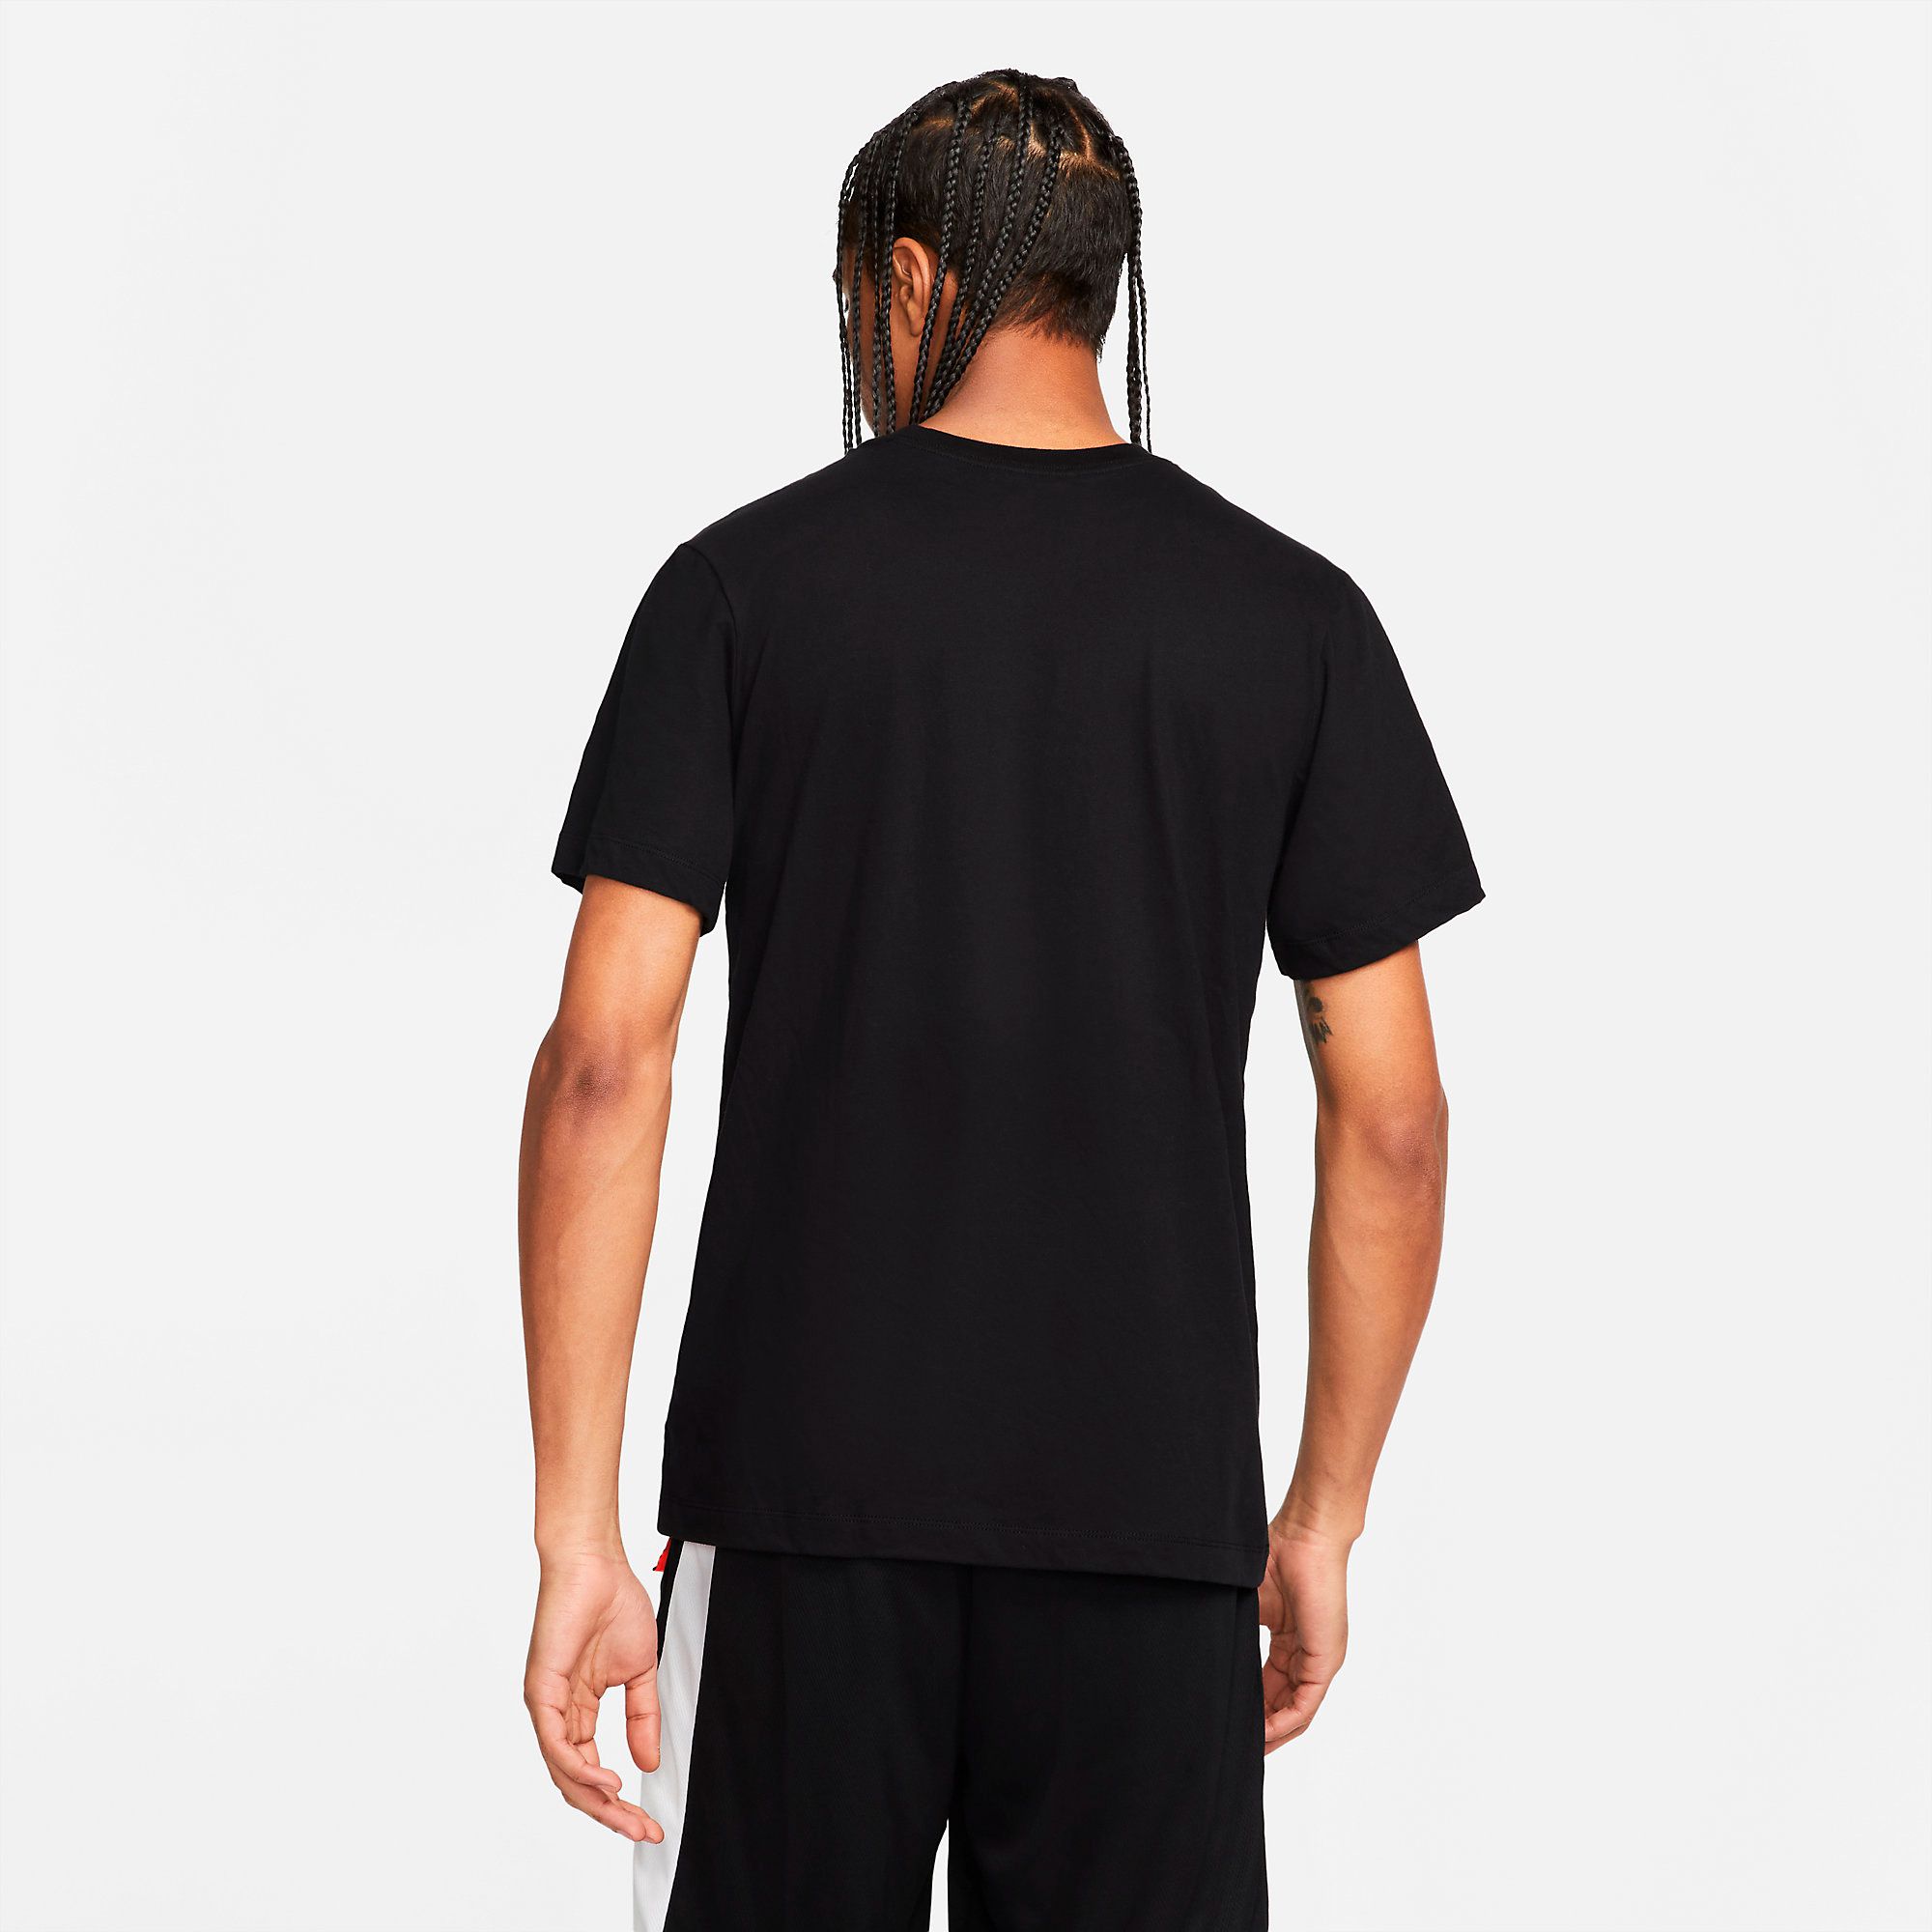  Nike Dri-FIT Basketball T-Shirt - Black 